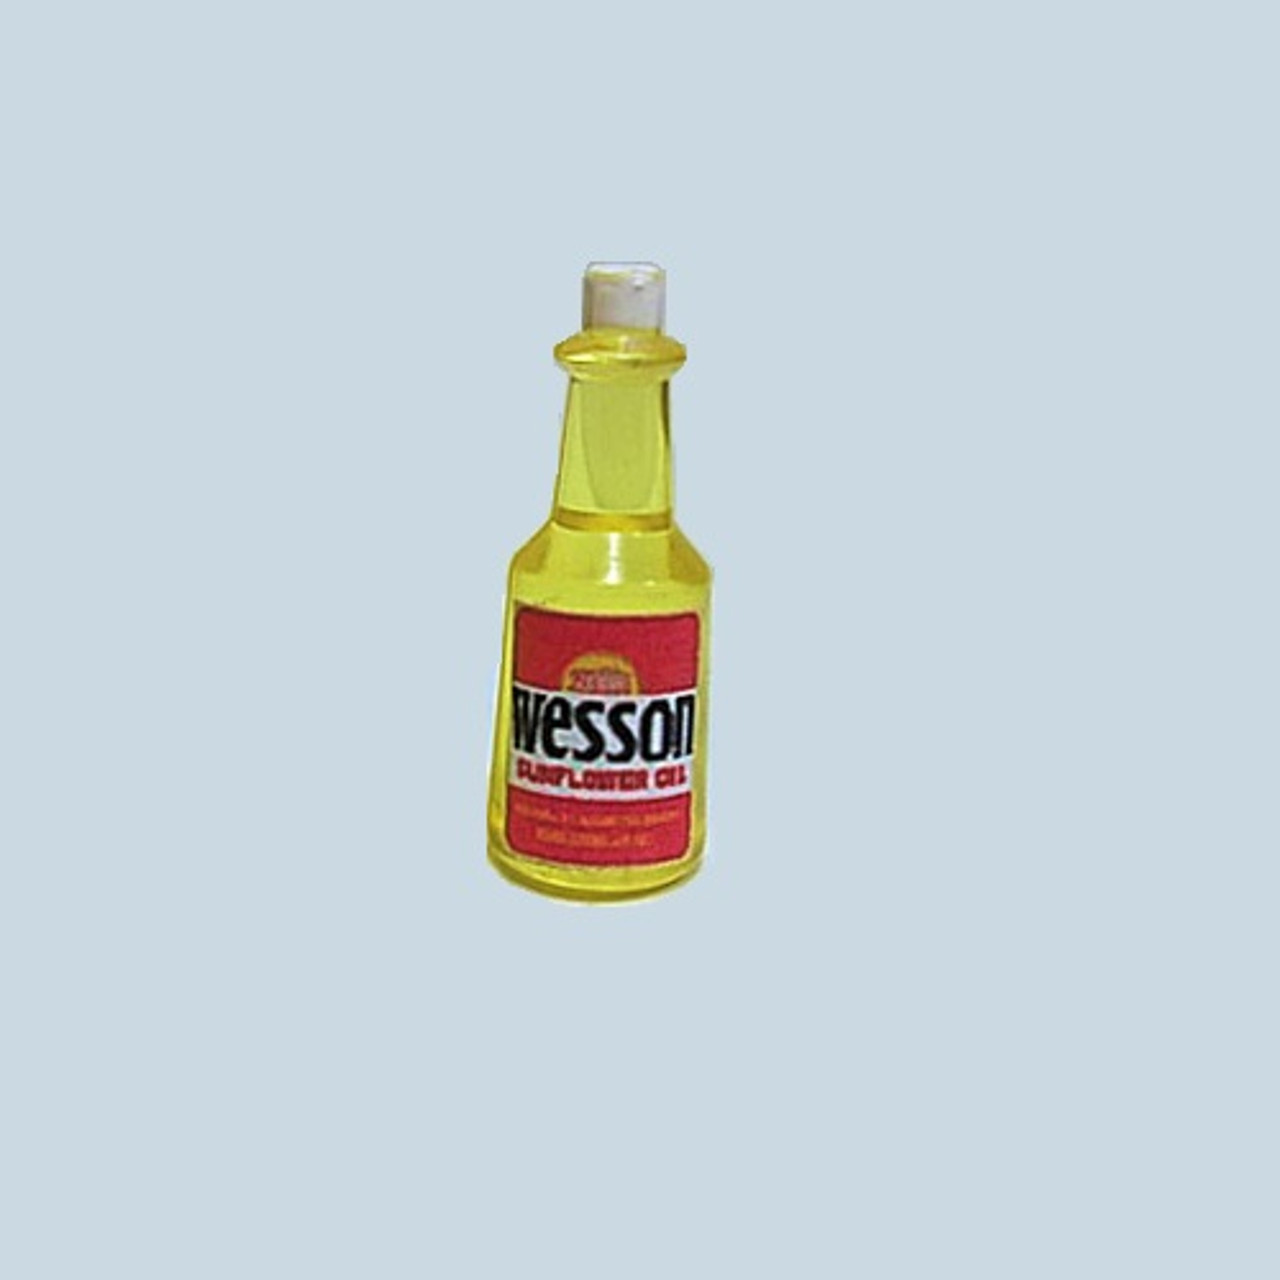 Wesson Sunflower Oil - 48 oz (HR54203)